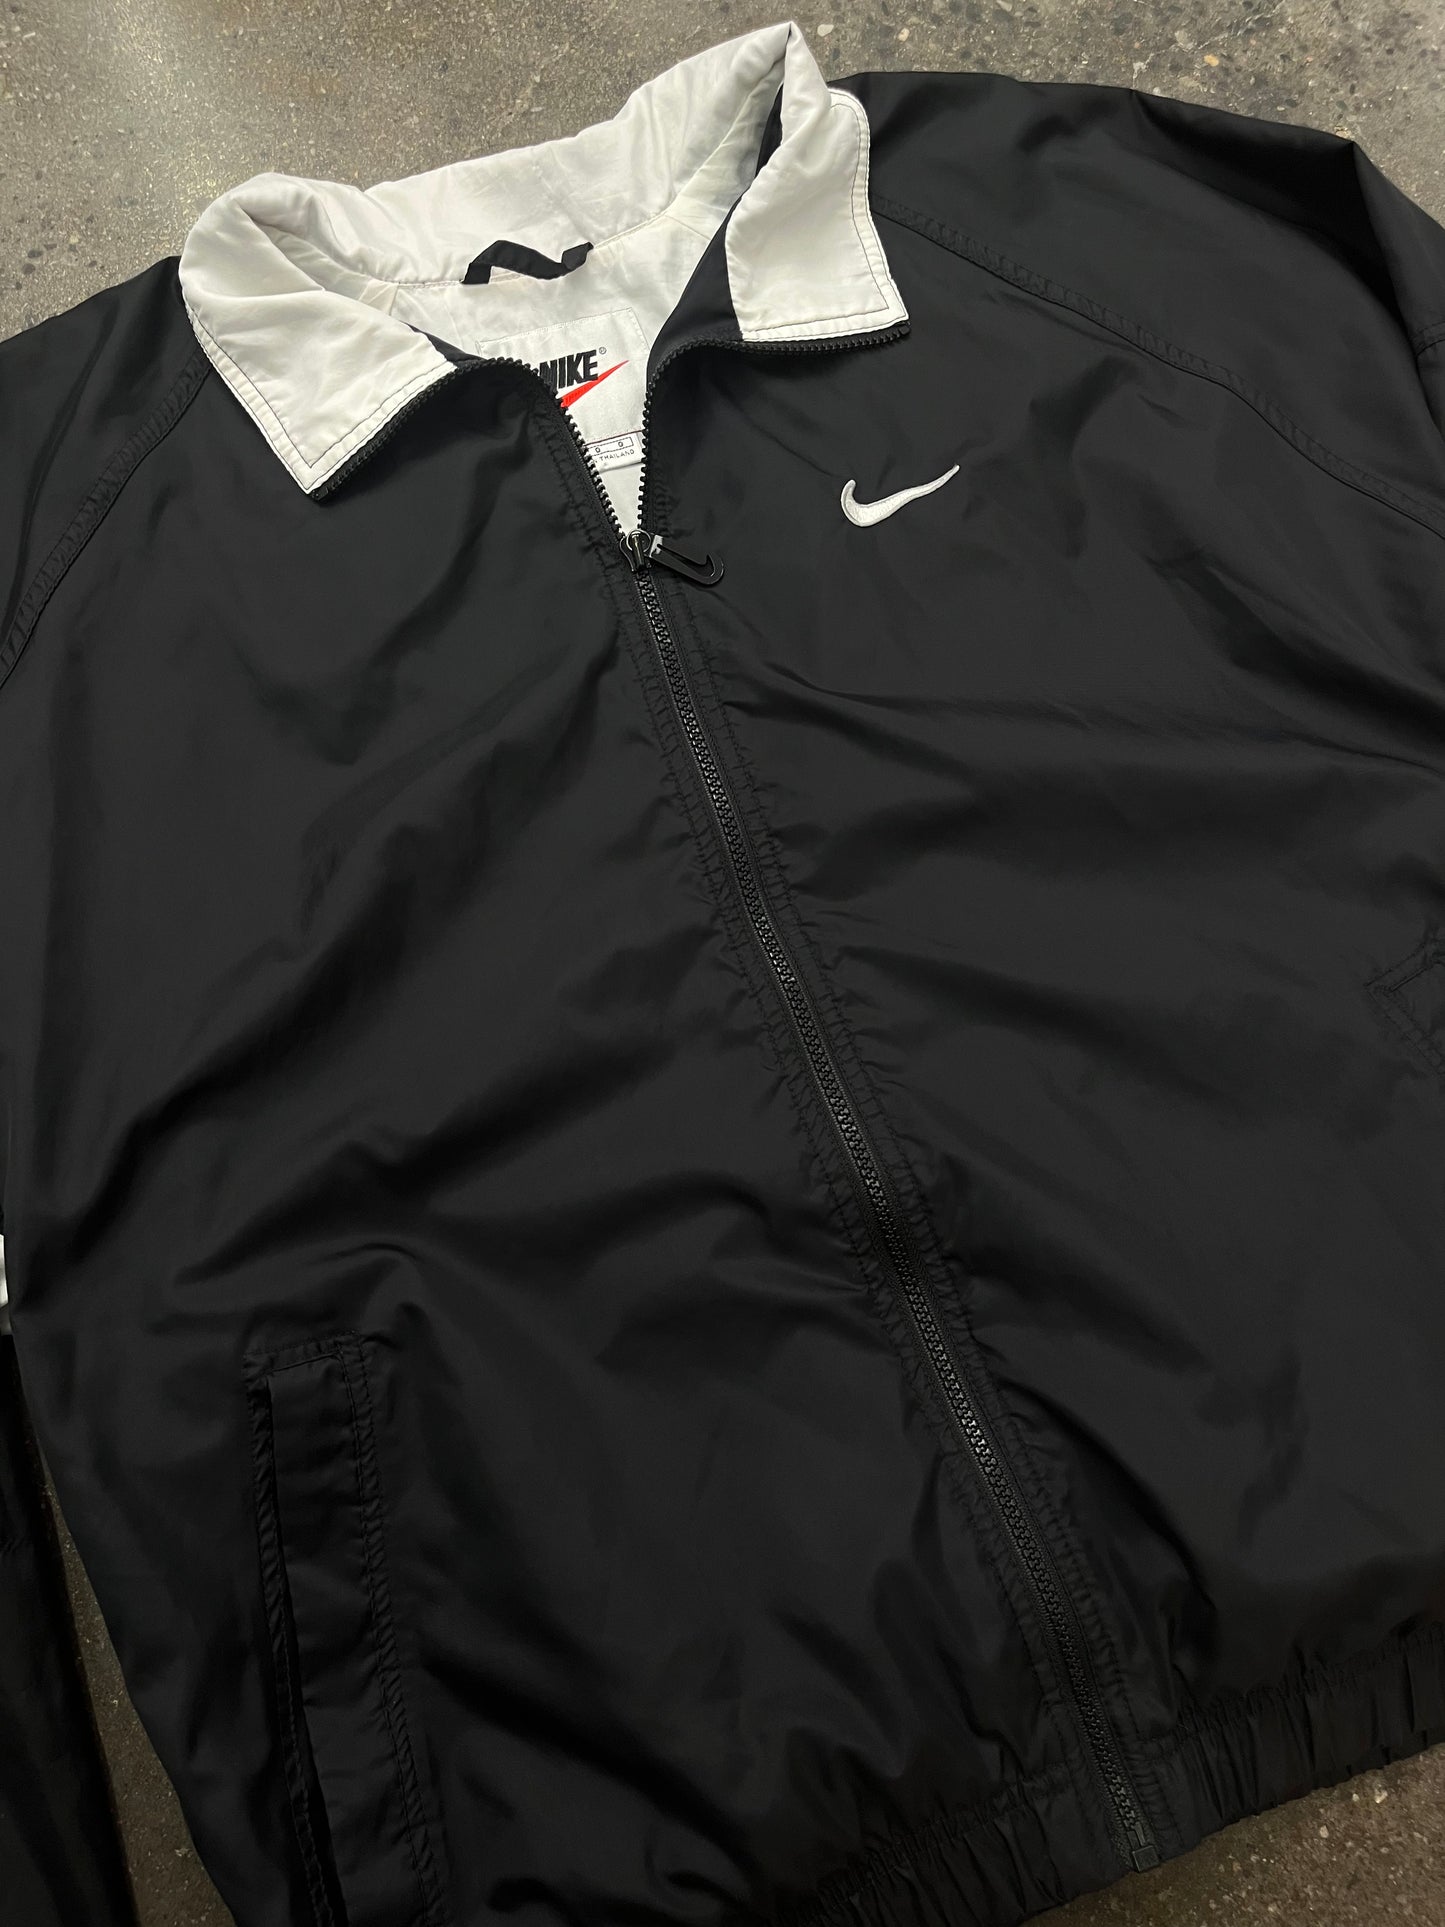 Vintage Nike Windbreaker Jacket Black/White Size L